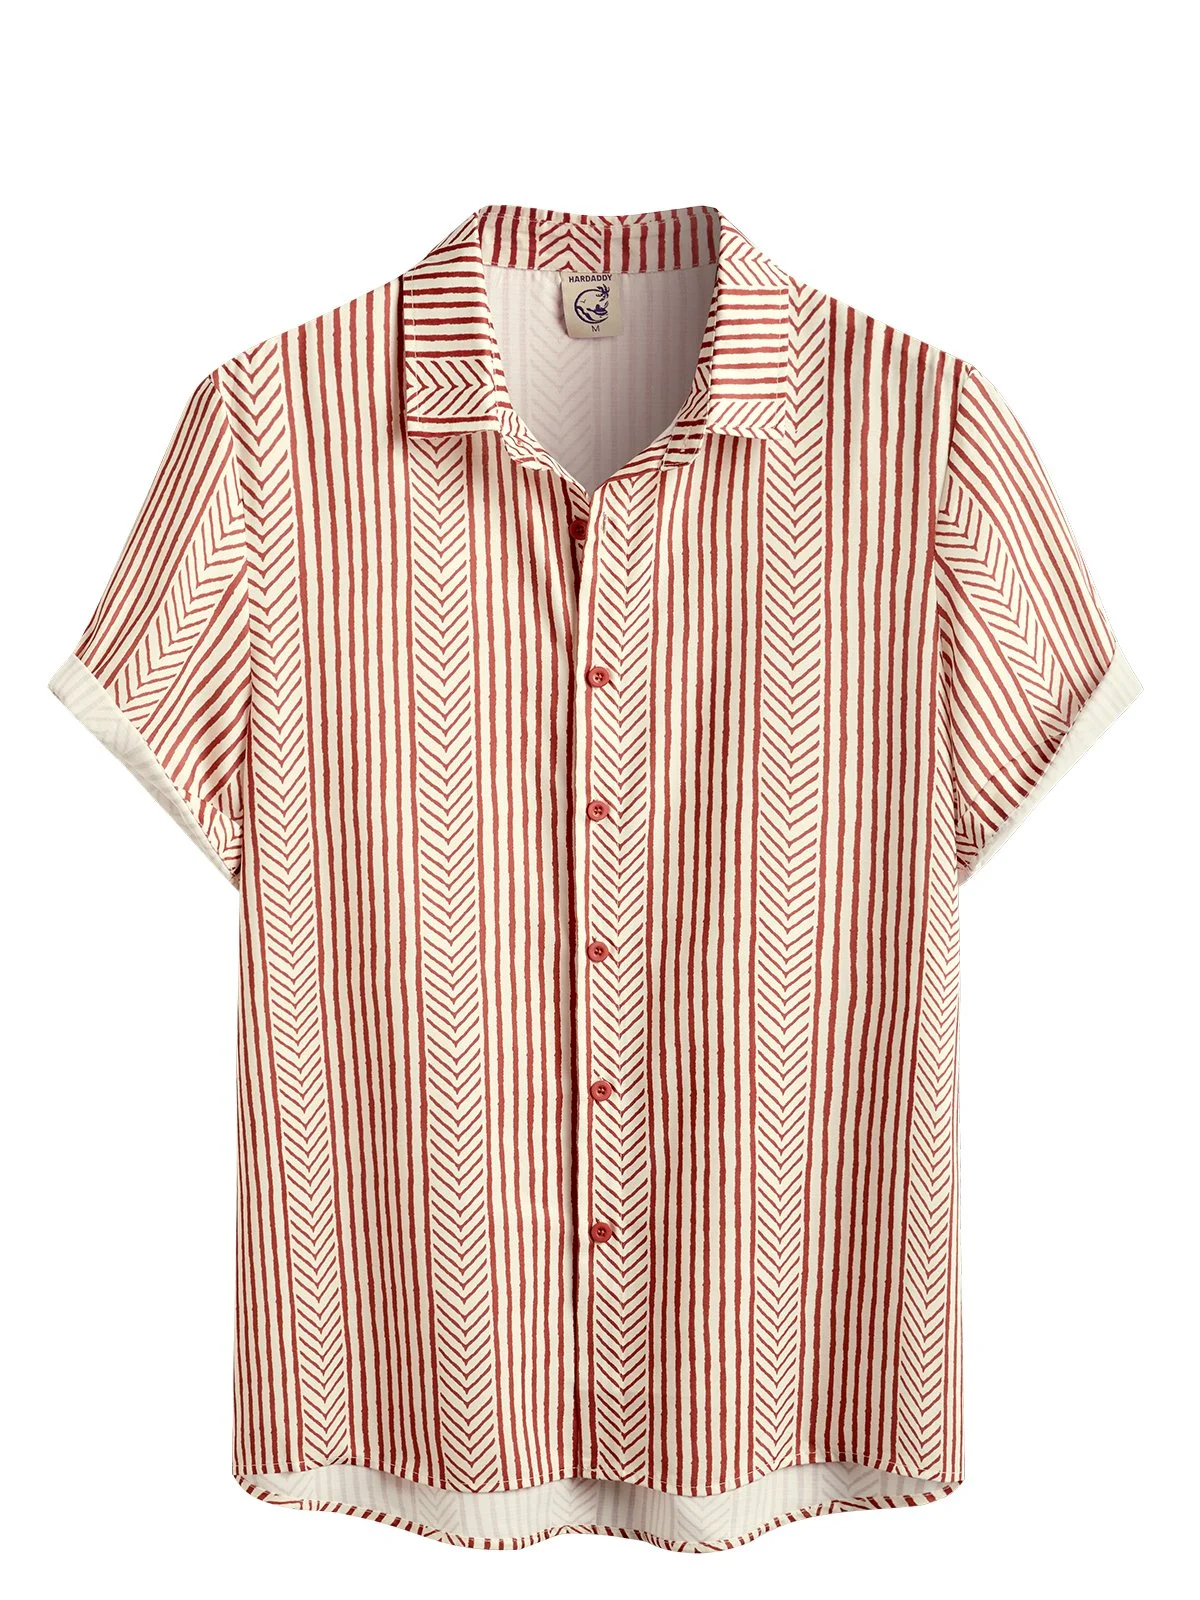 Hardaddy Big Size Retro Striped Chest Pocket Short Sleeve Shirt